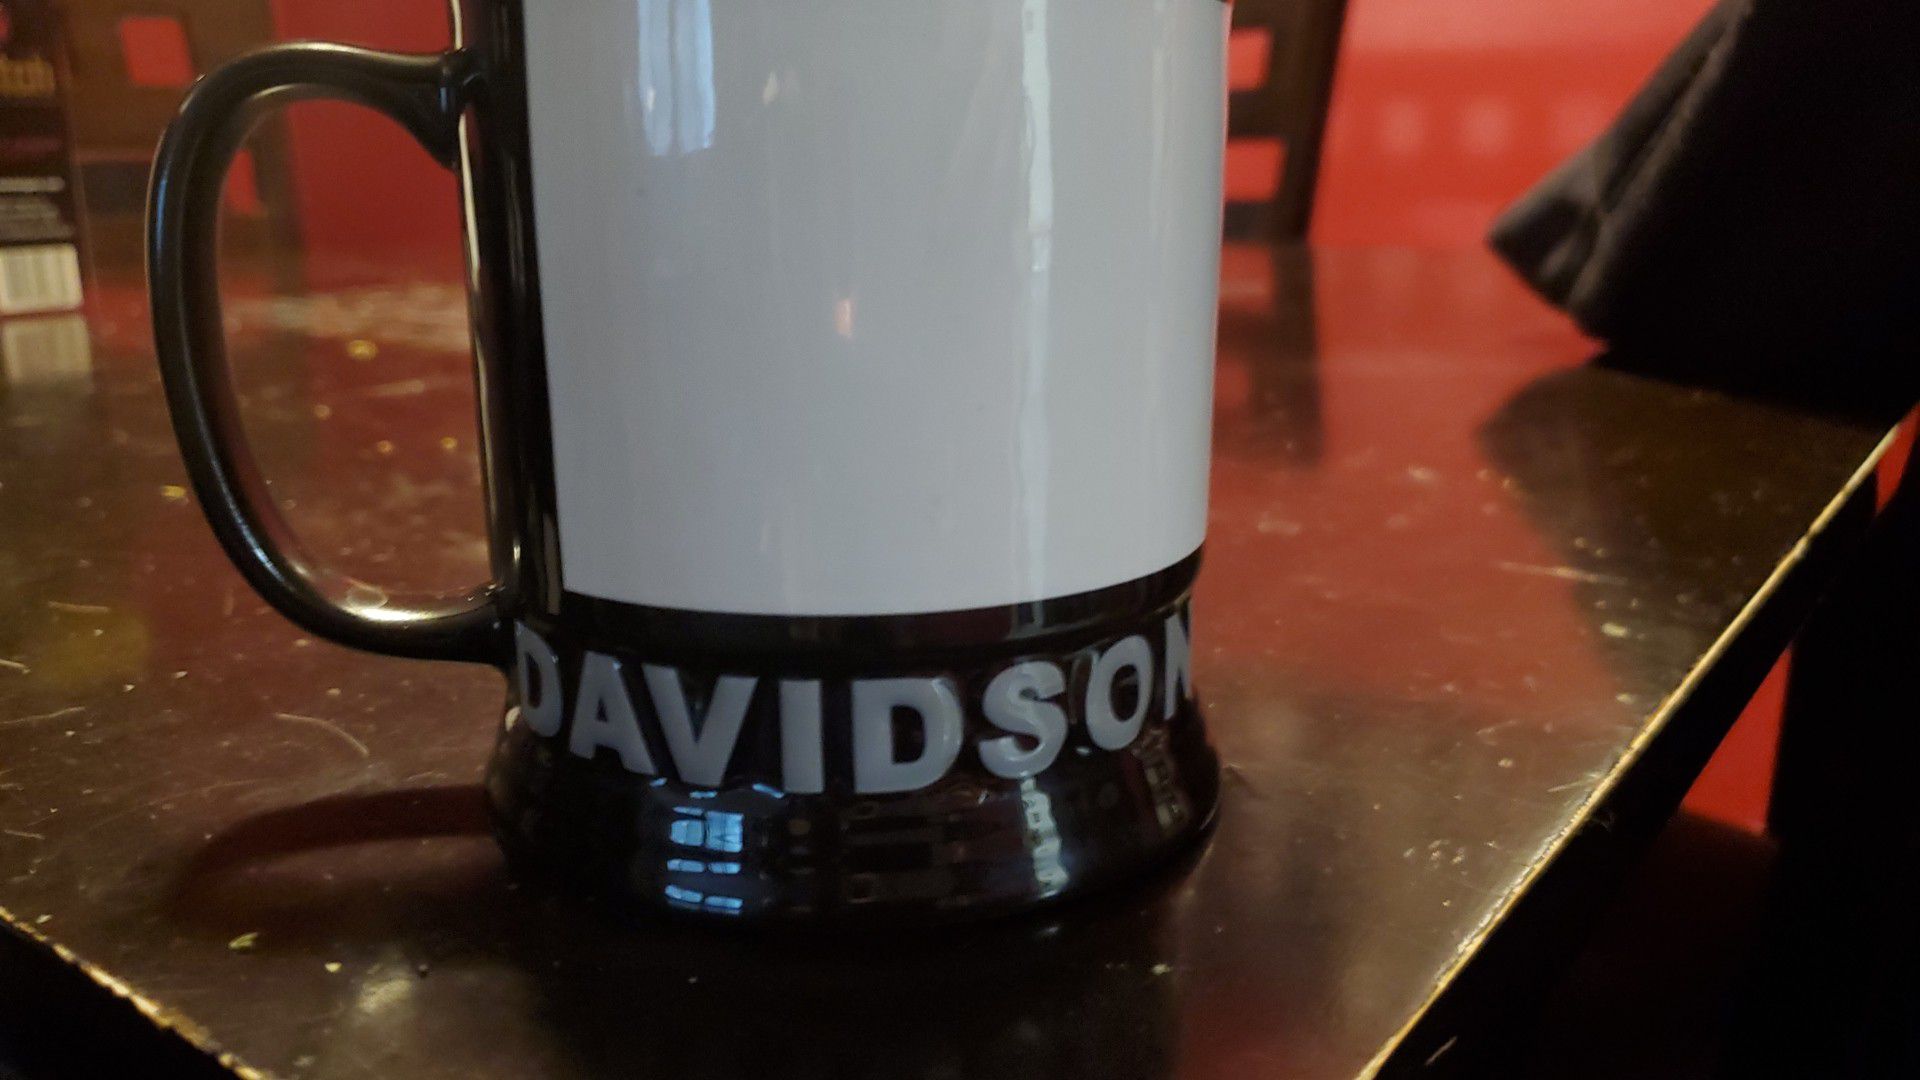 Harley Davidson mugs u can write your name on it